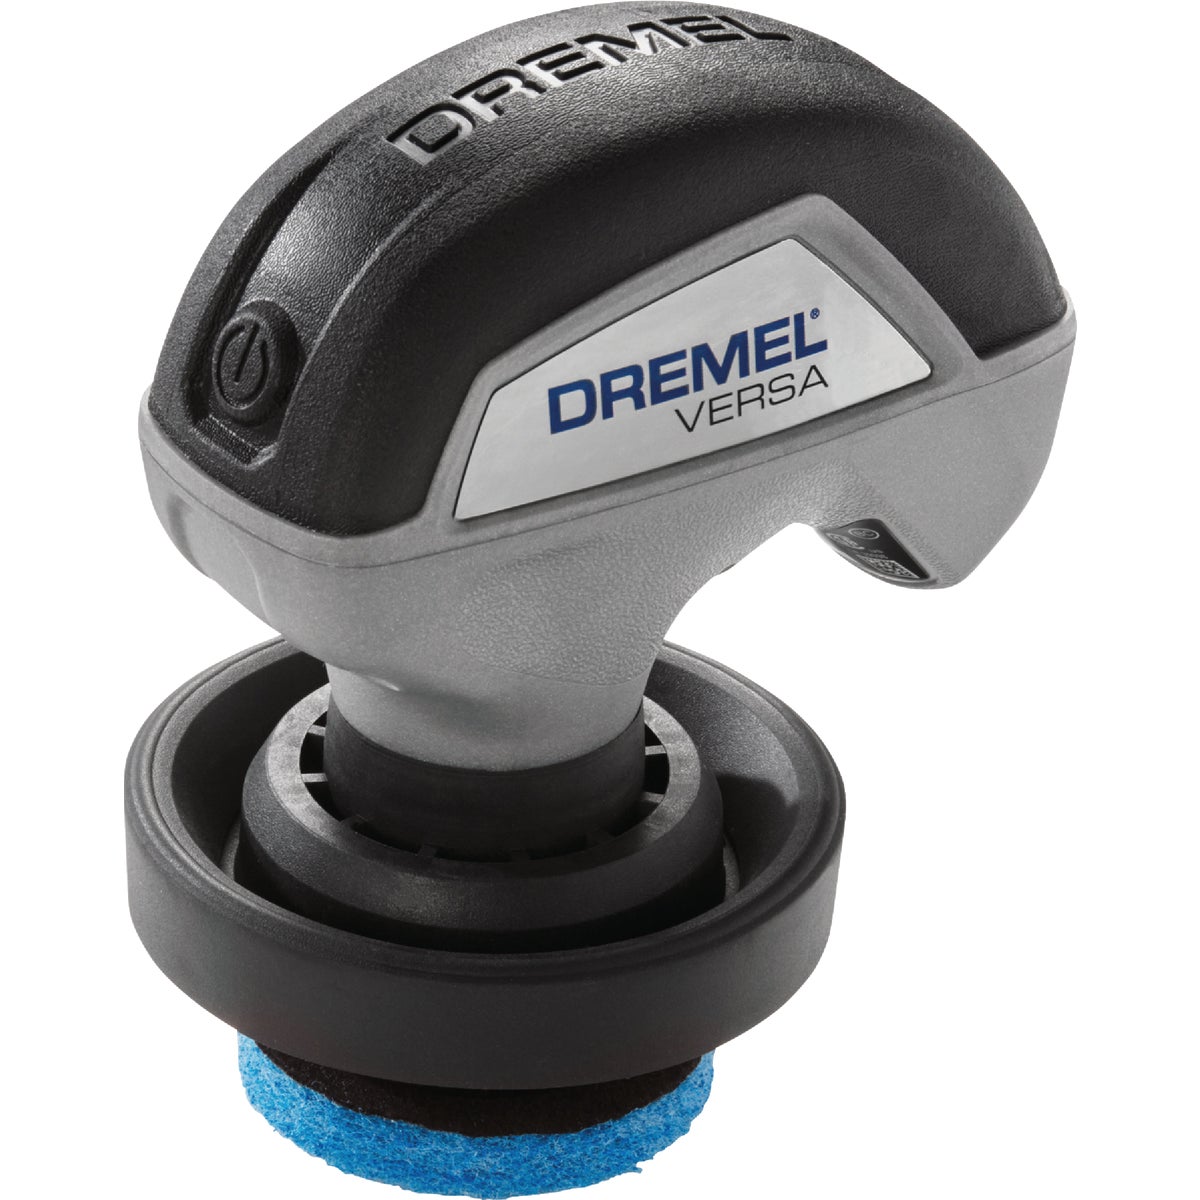 Dremel Versa 4.0 Volt Lithium-Ion Single Speed Cleaning Cordless Rotary Tool Kit